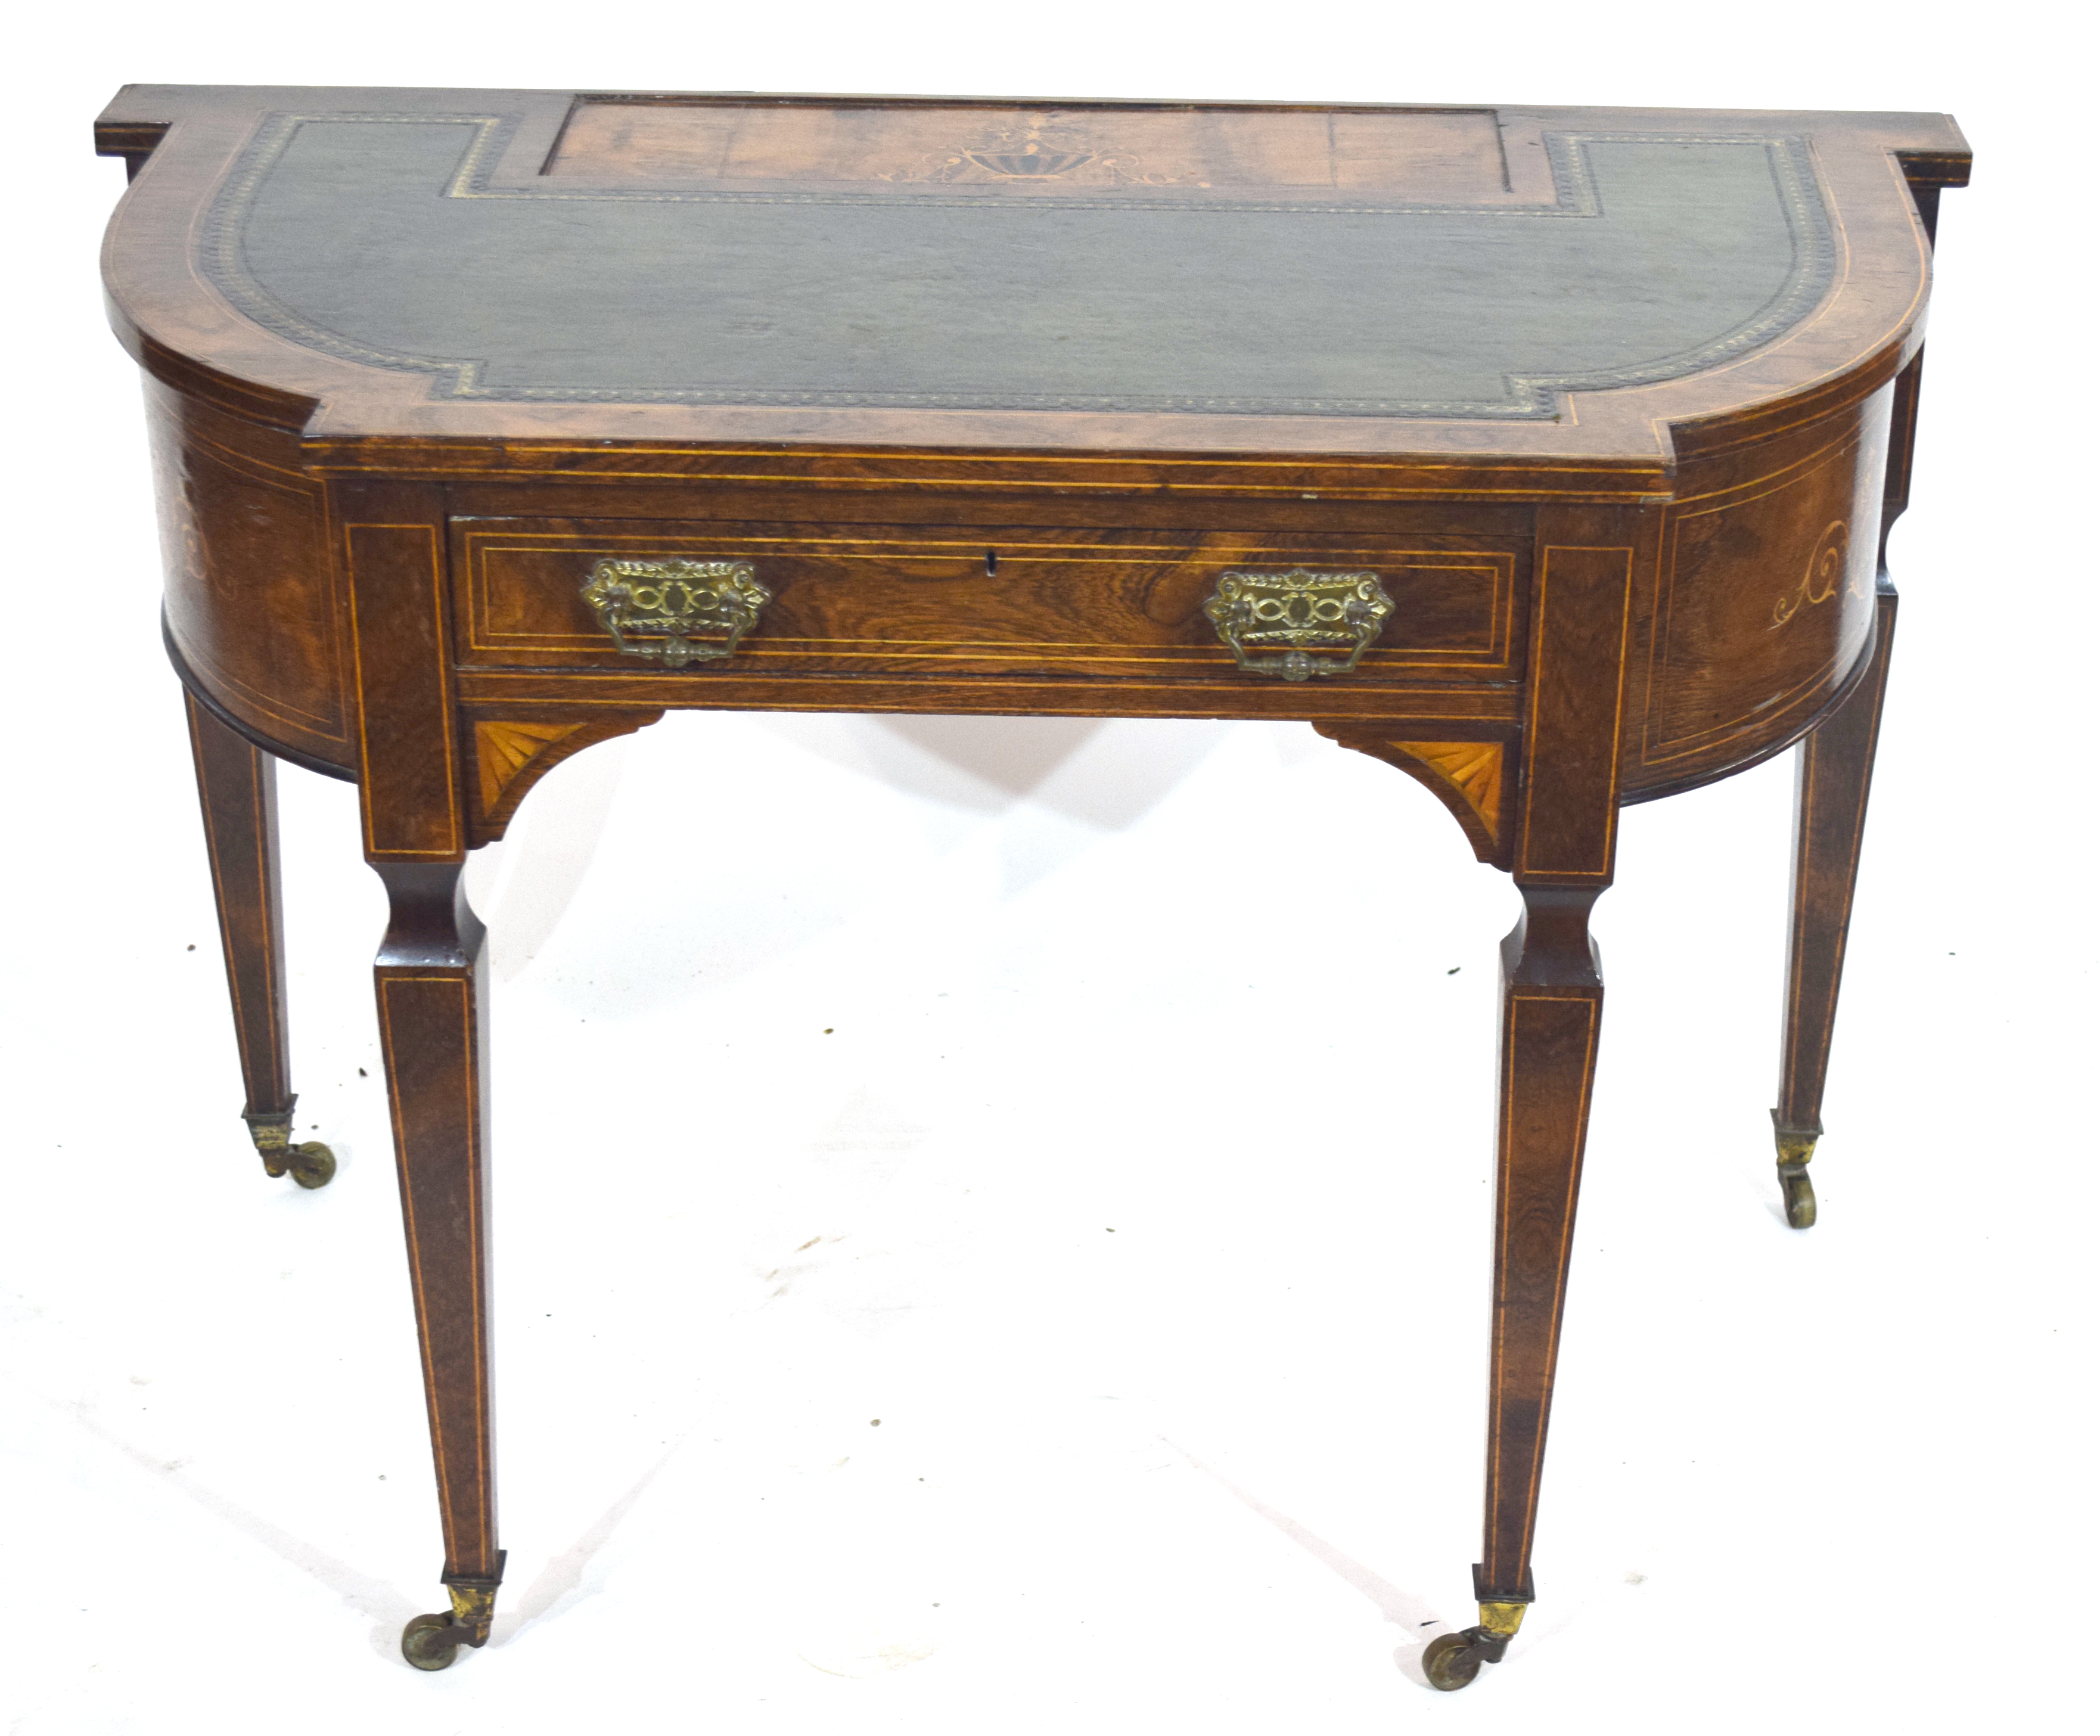 Late 19th century walnut veneered writing desk